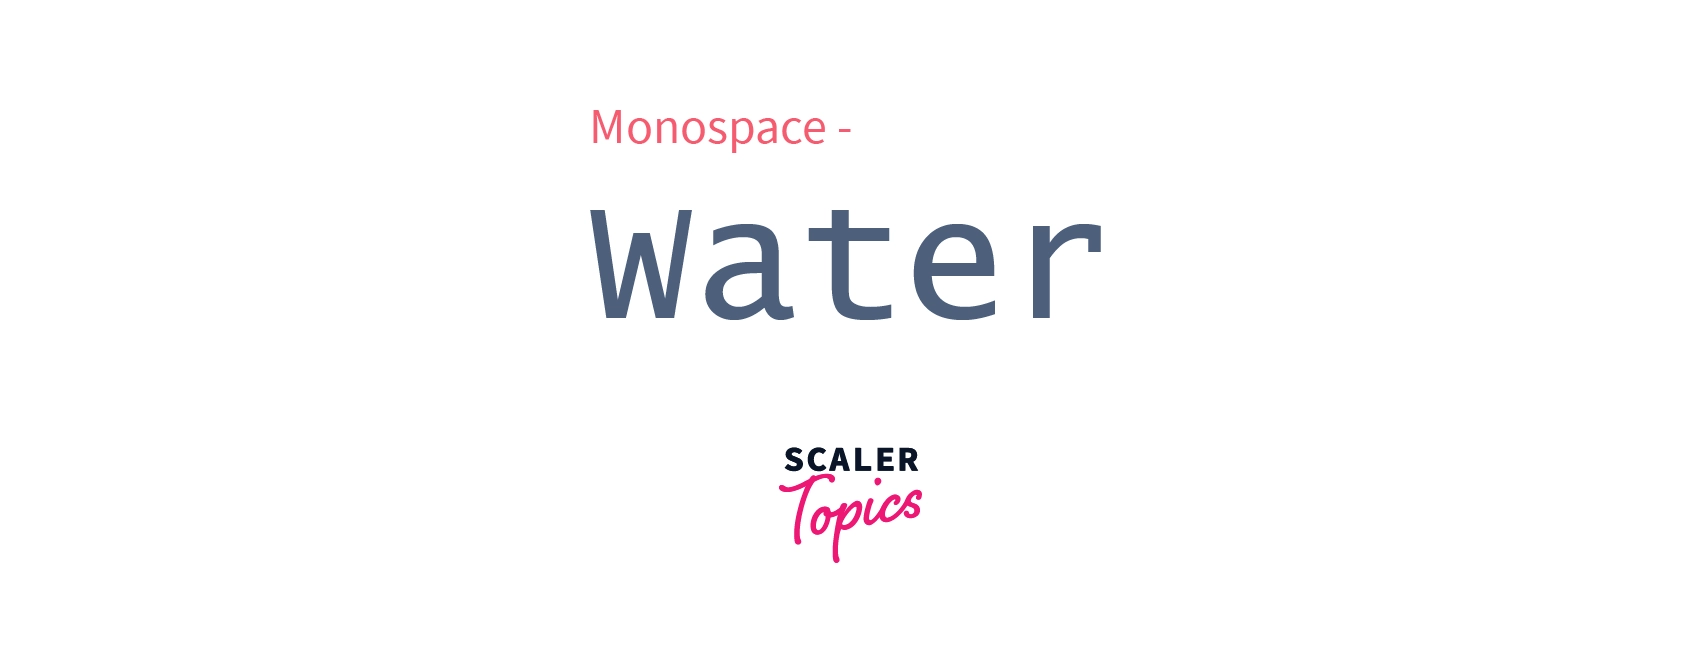 monospace font image